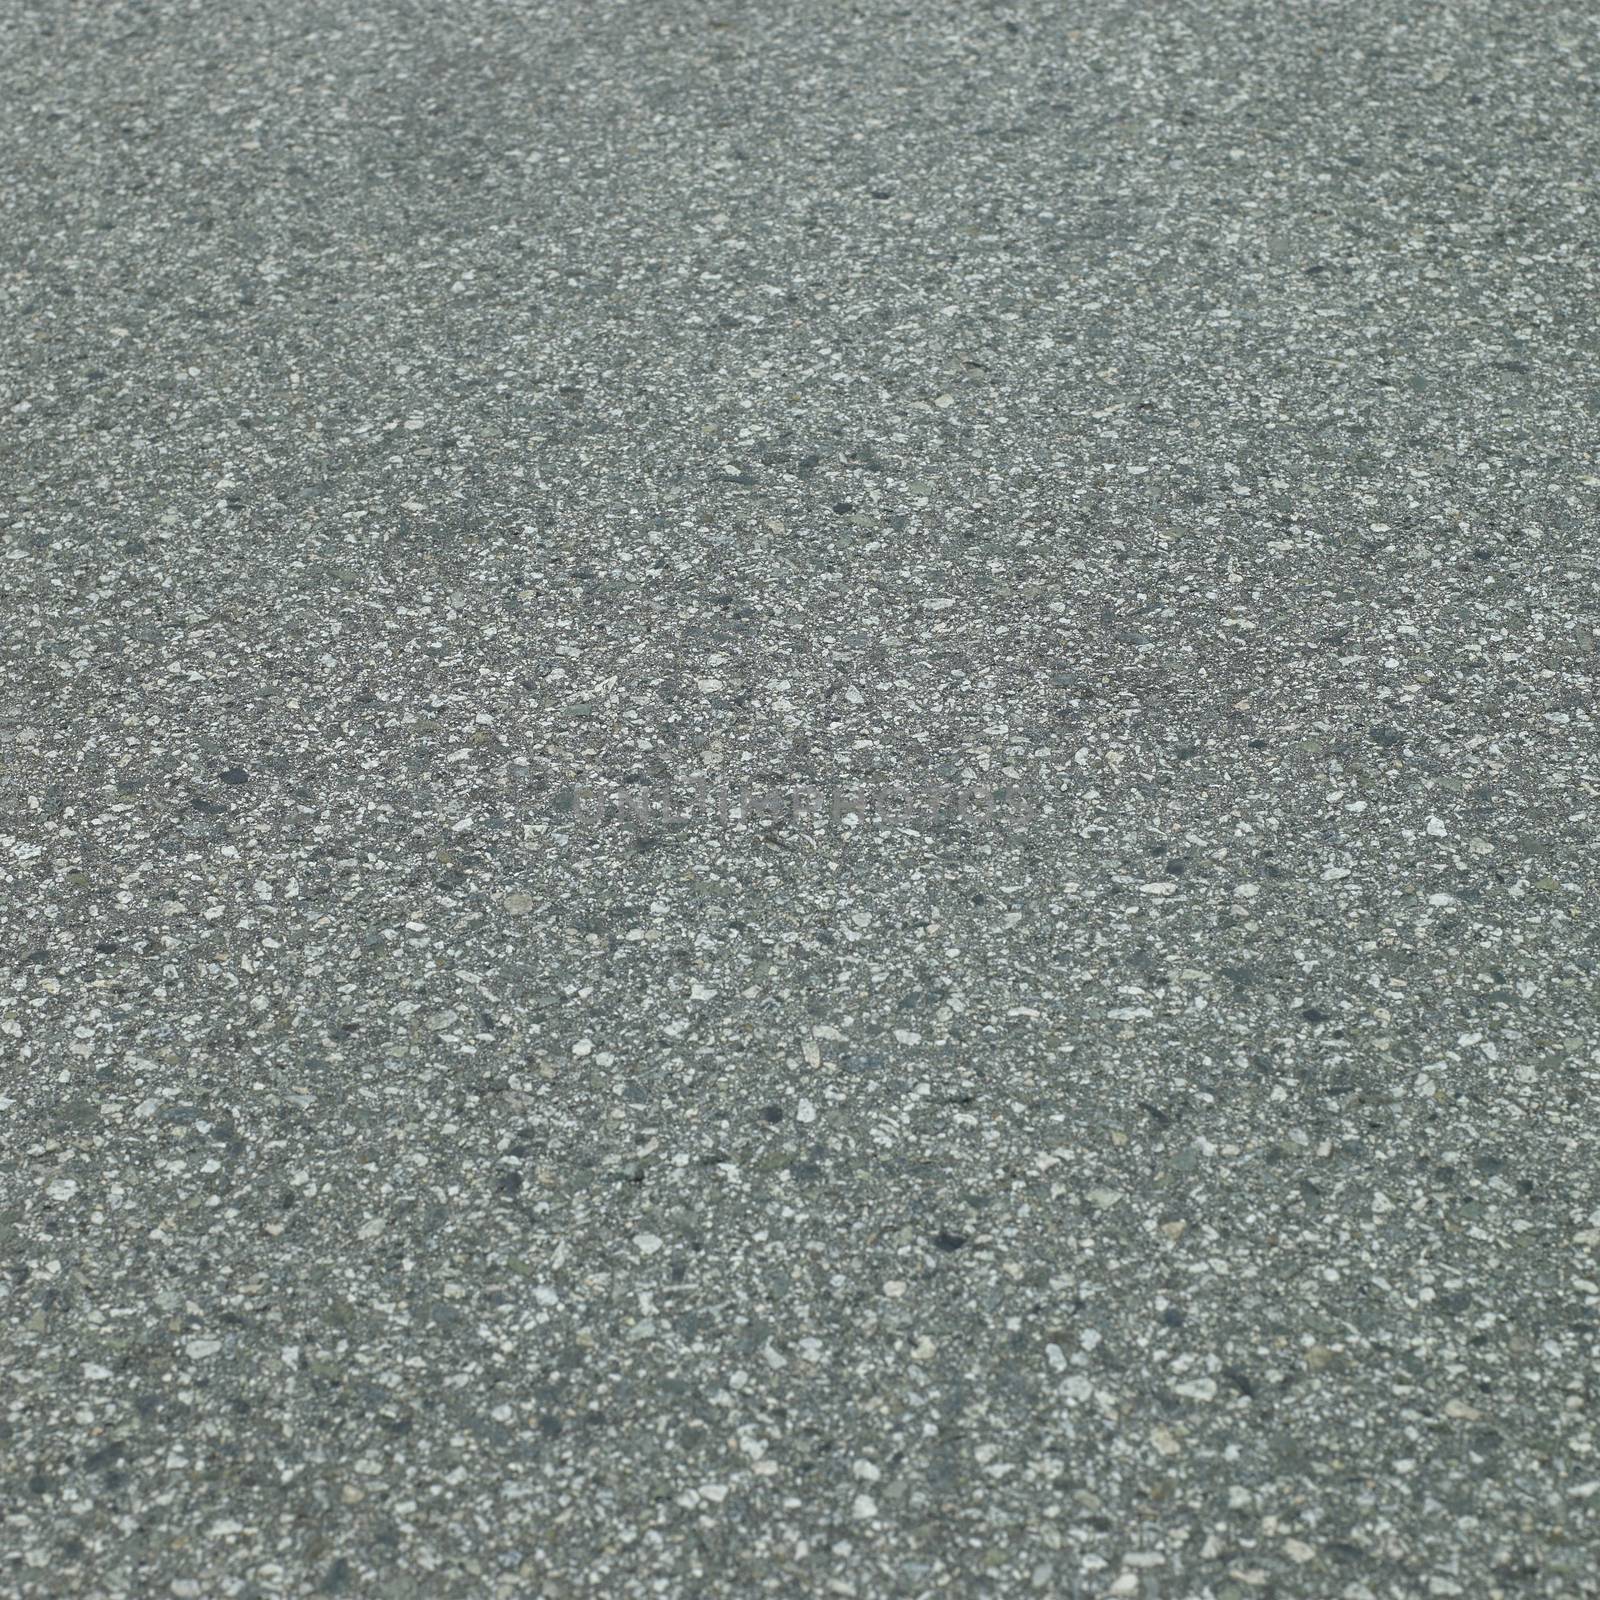 Close up of grey pavement